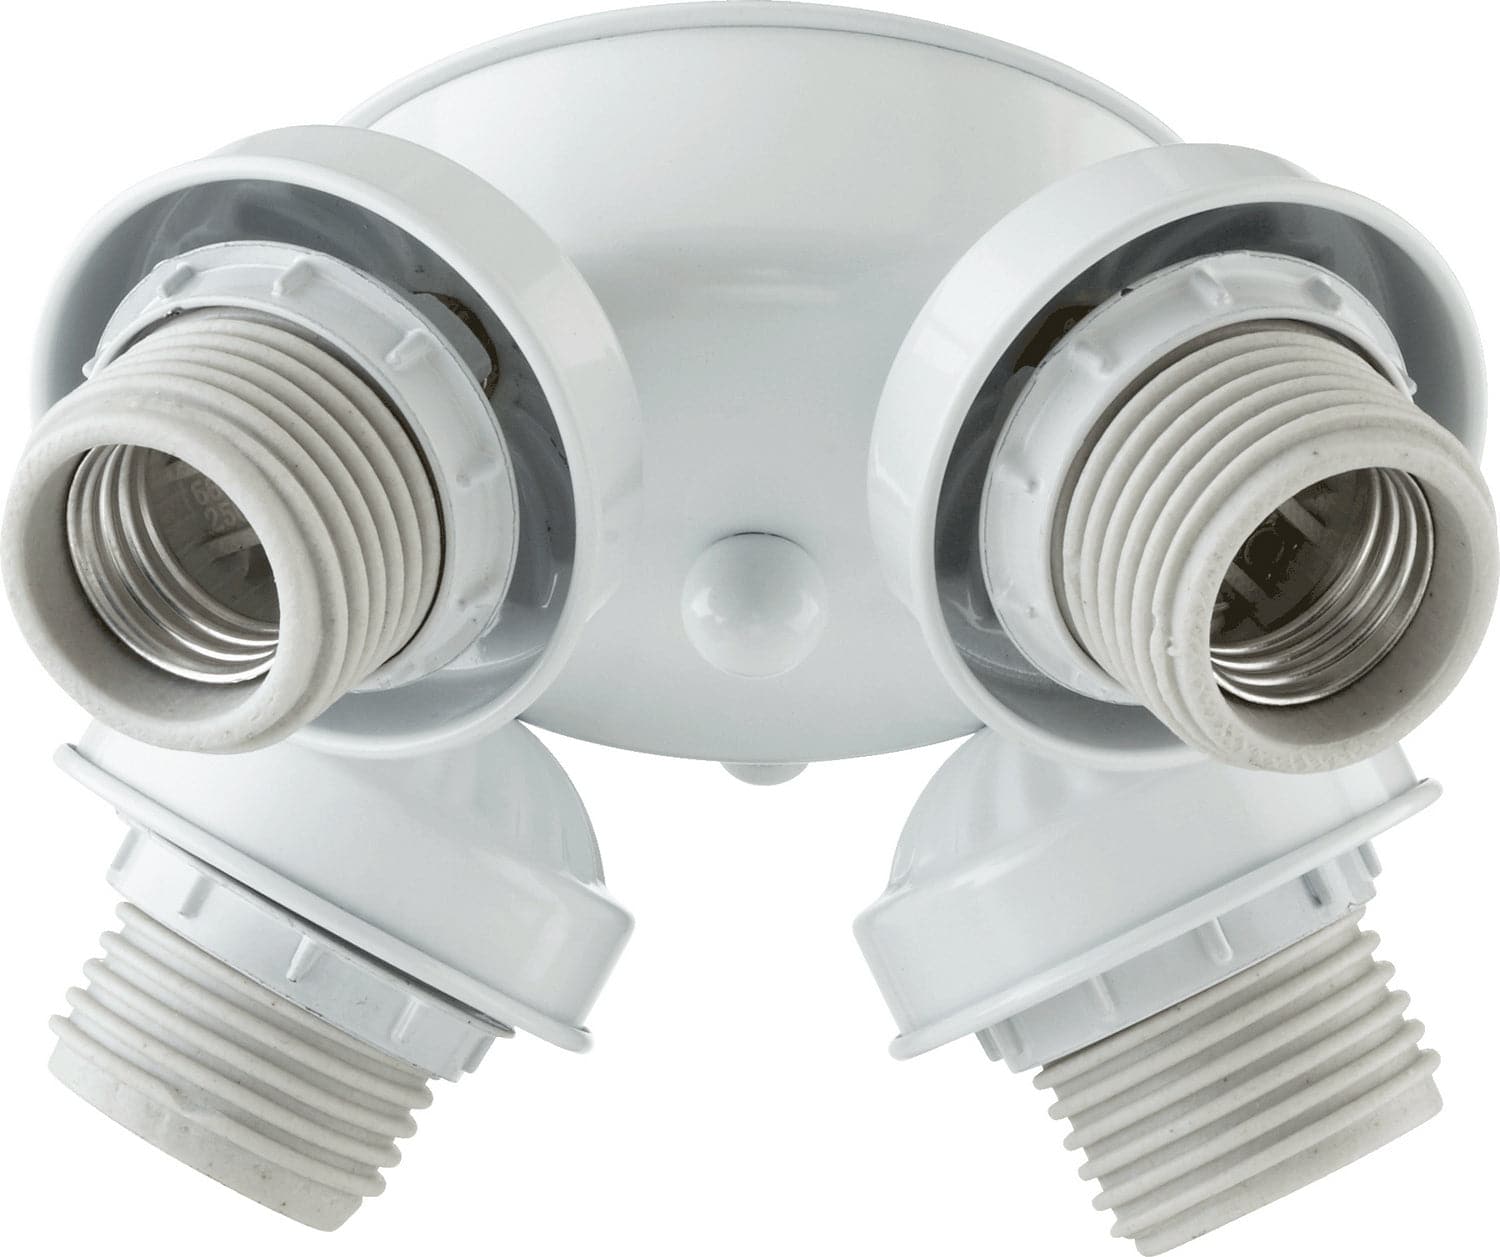 Quorum - 2401-806 - LED Fan Light Kit - 2401 Light Kits - White